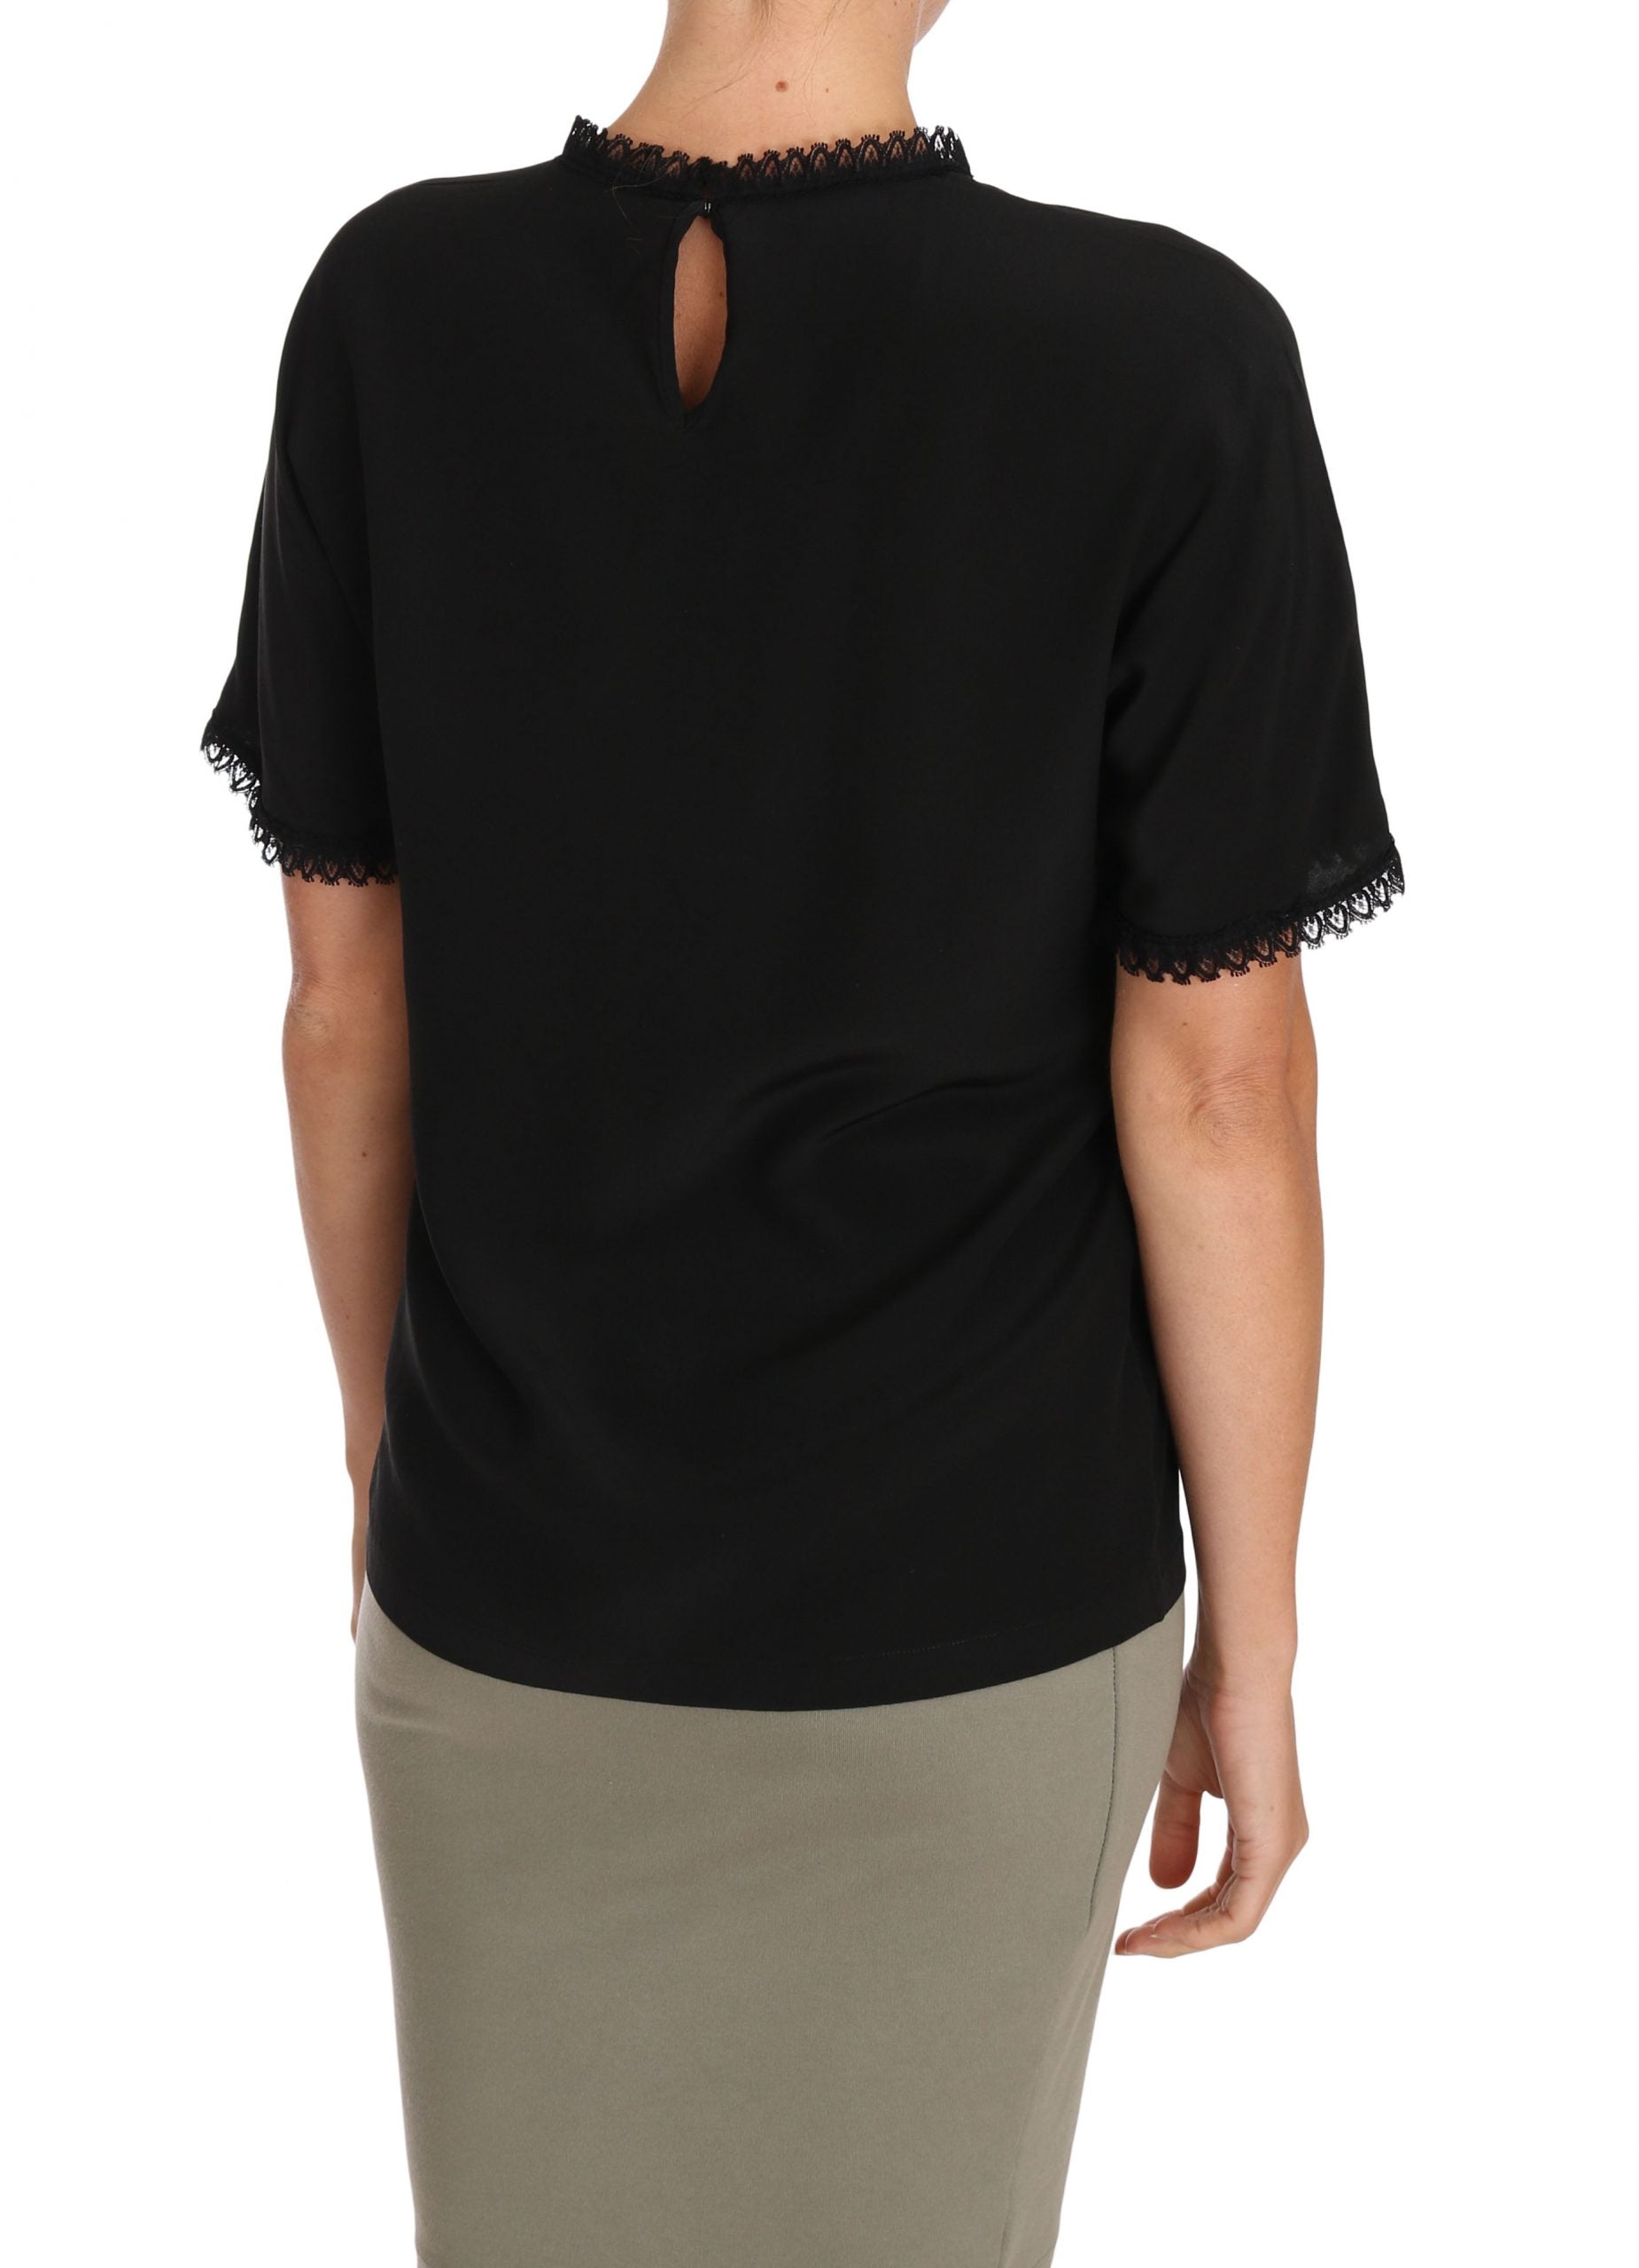 Buy Black Silk Lace Top Blouse T-Shirt by Dolce & Gabbana